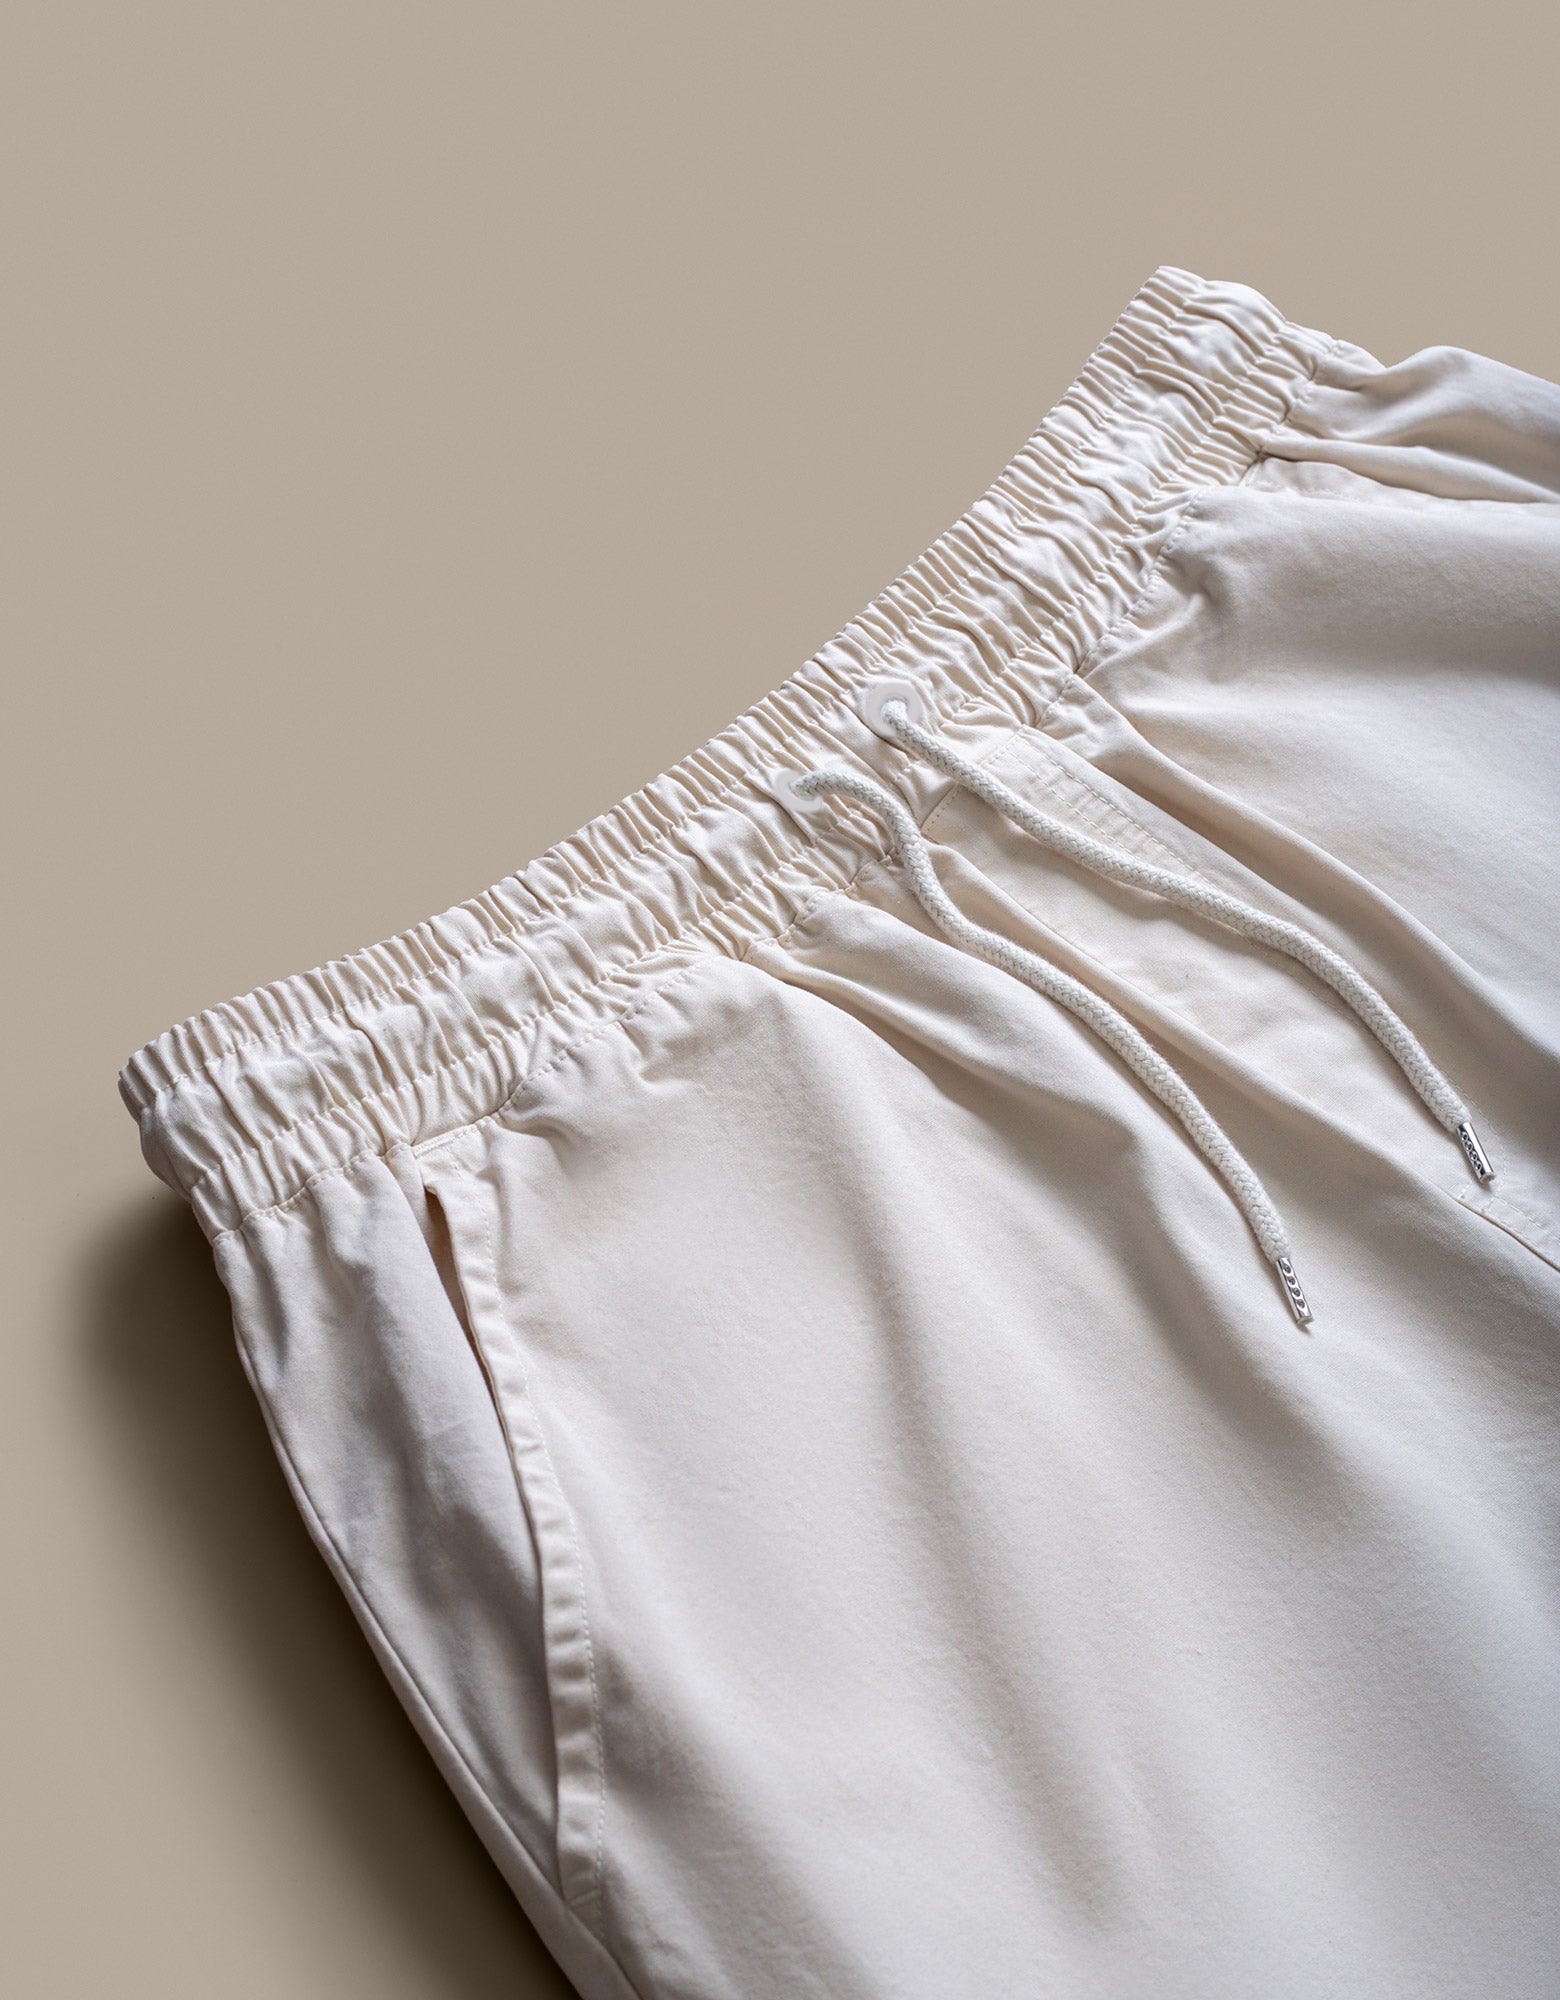 Colorful Standard Organic Twill Shorts Twill Shorts Ivory White